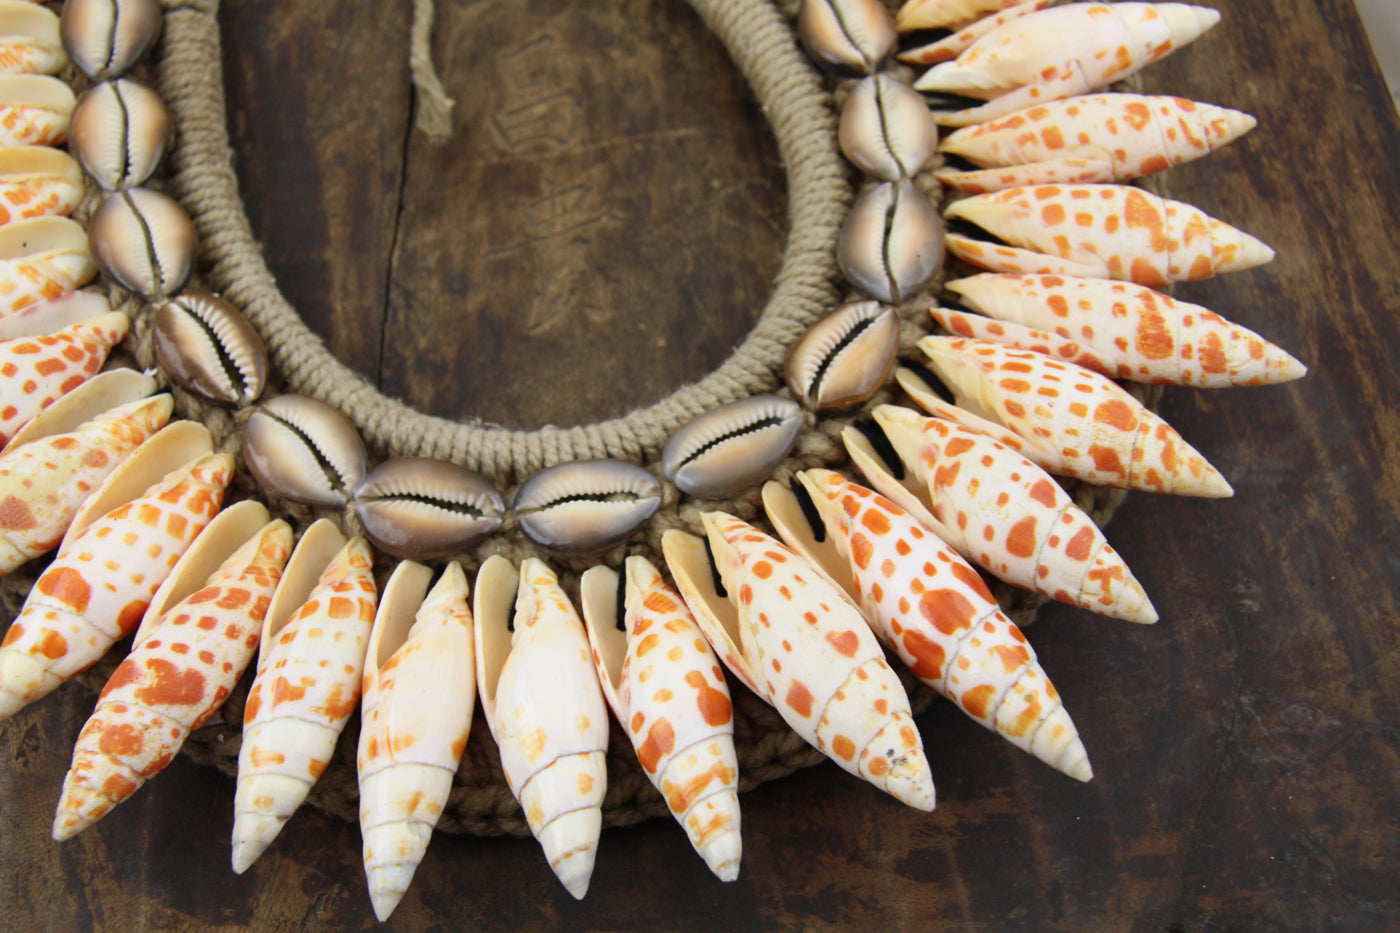 Vivid Orange And Cream Shell Necklace from Papua, New Guinea - ShopWomanShopsWorld.com. Bone Beads, Tassels, Pom Poms, African Beads.